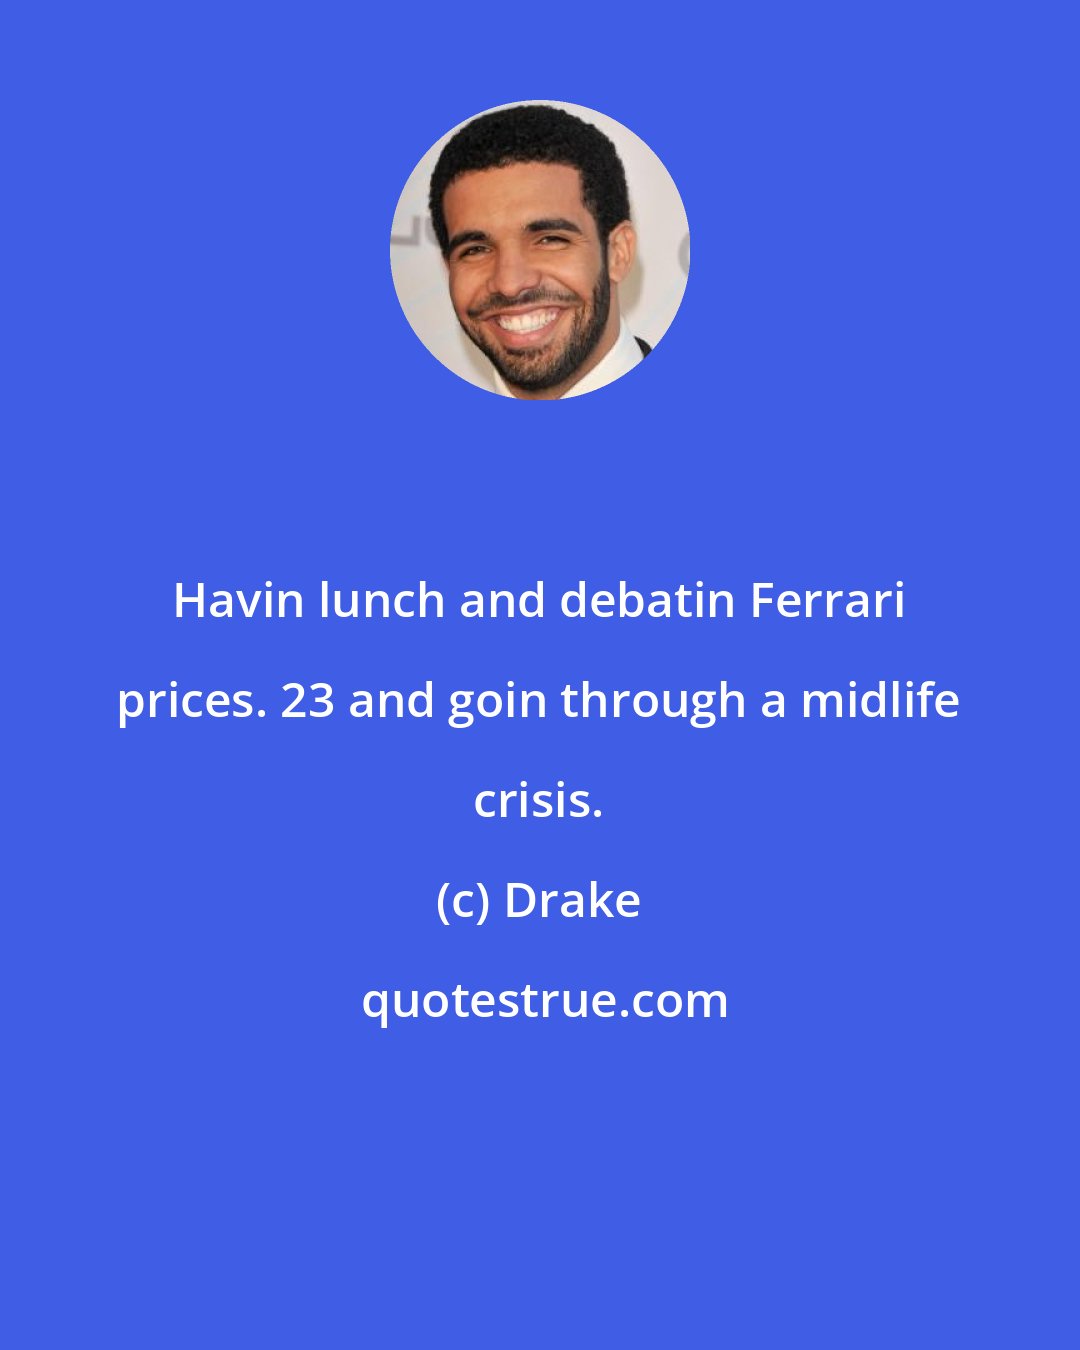 Drake: Havin lunch and debatin Ferrari prices. 23 and goin through a midlife crisis.